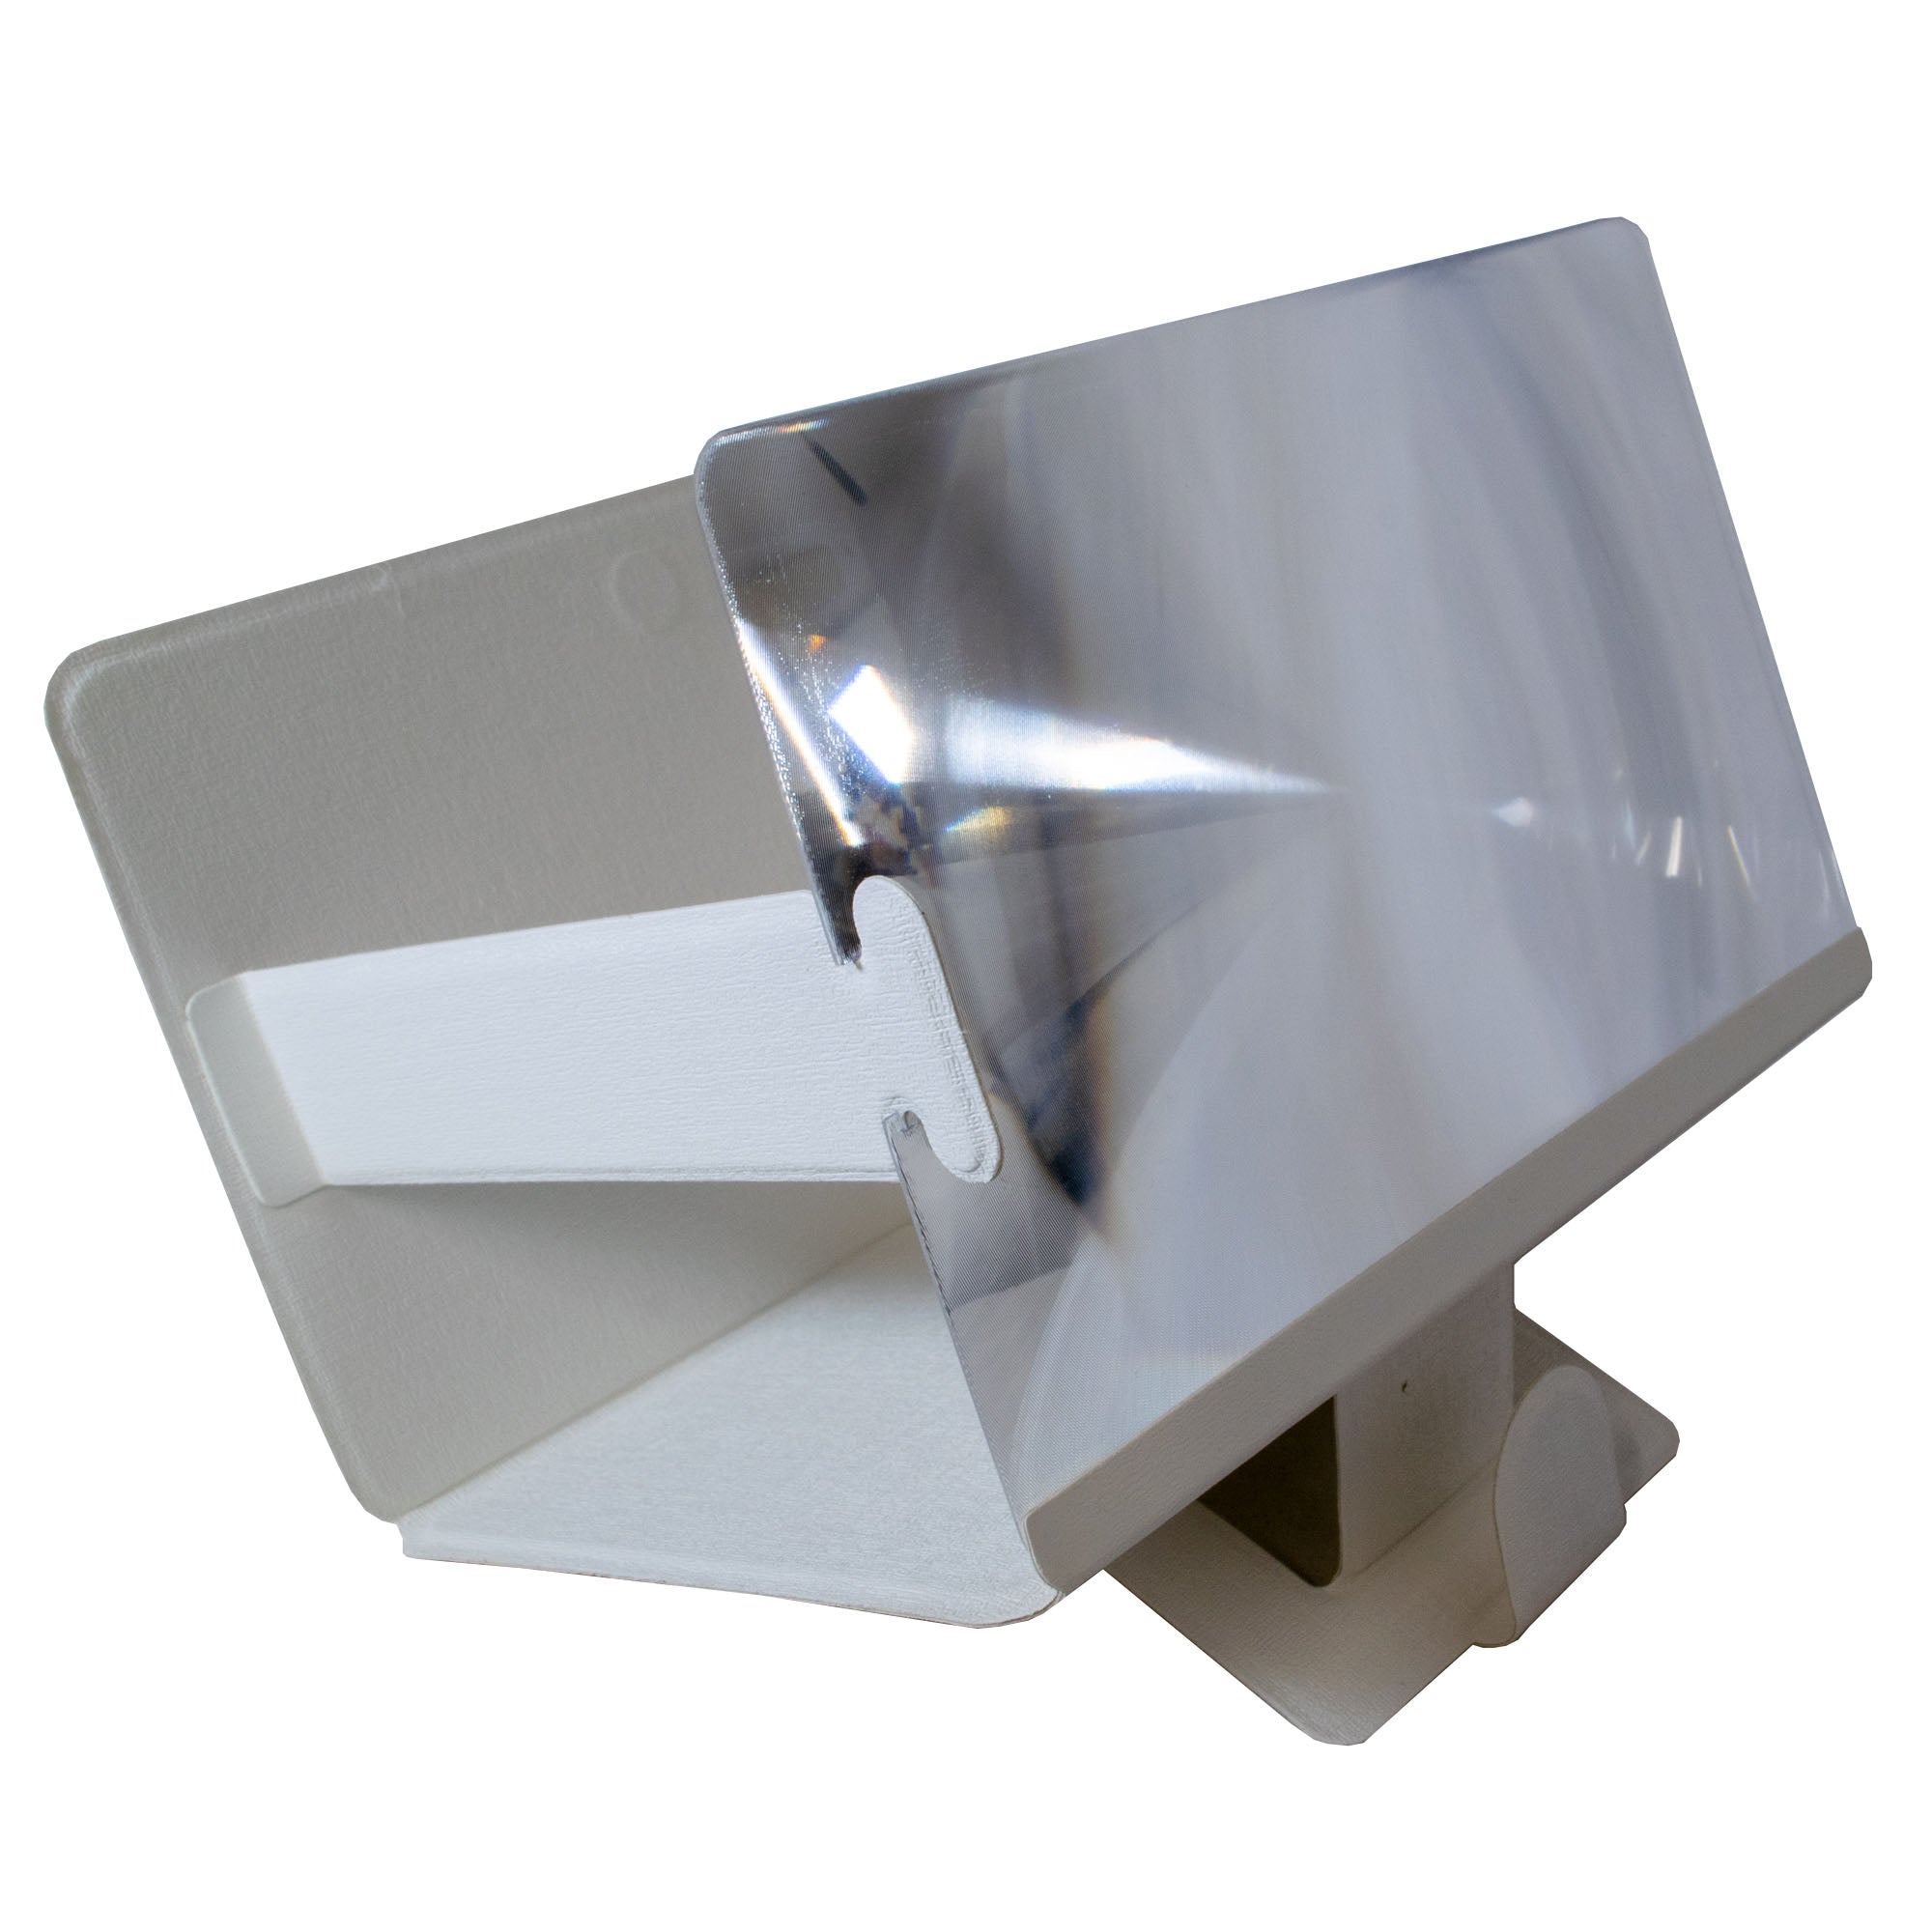 Folding phone screen magnifier